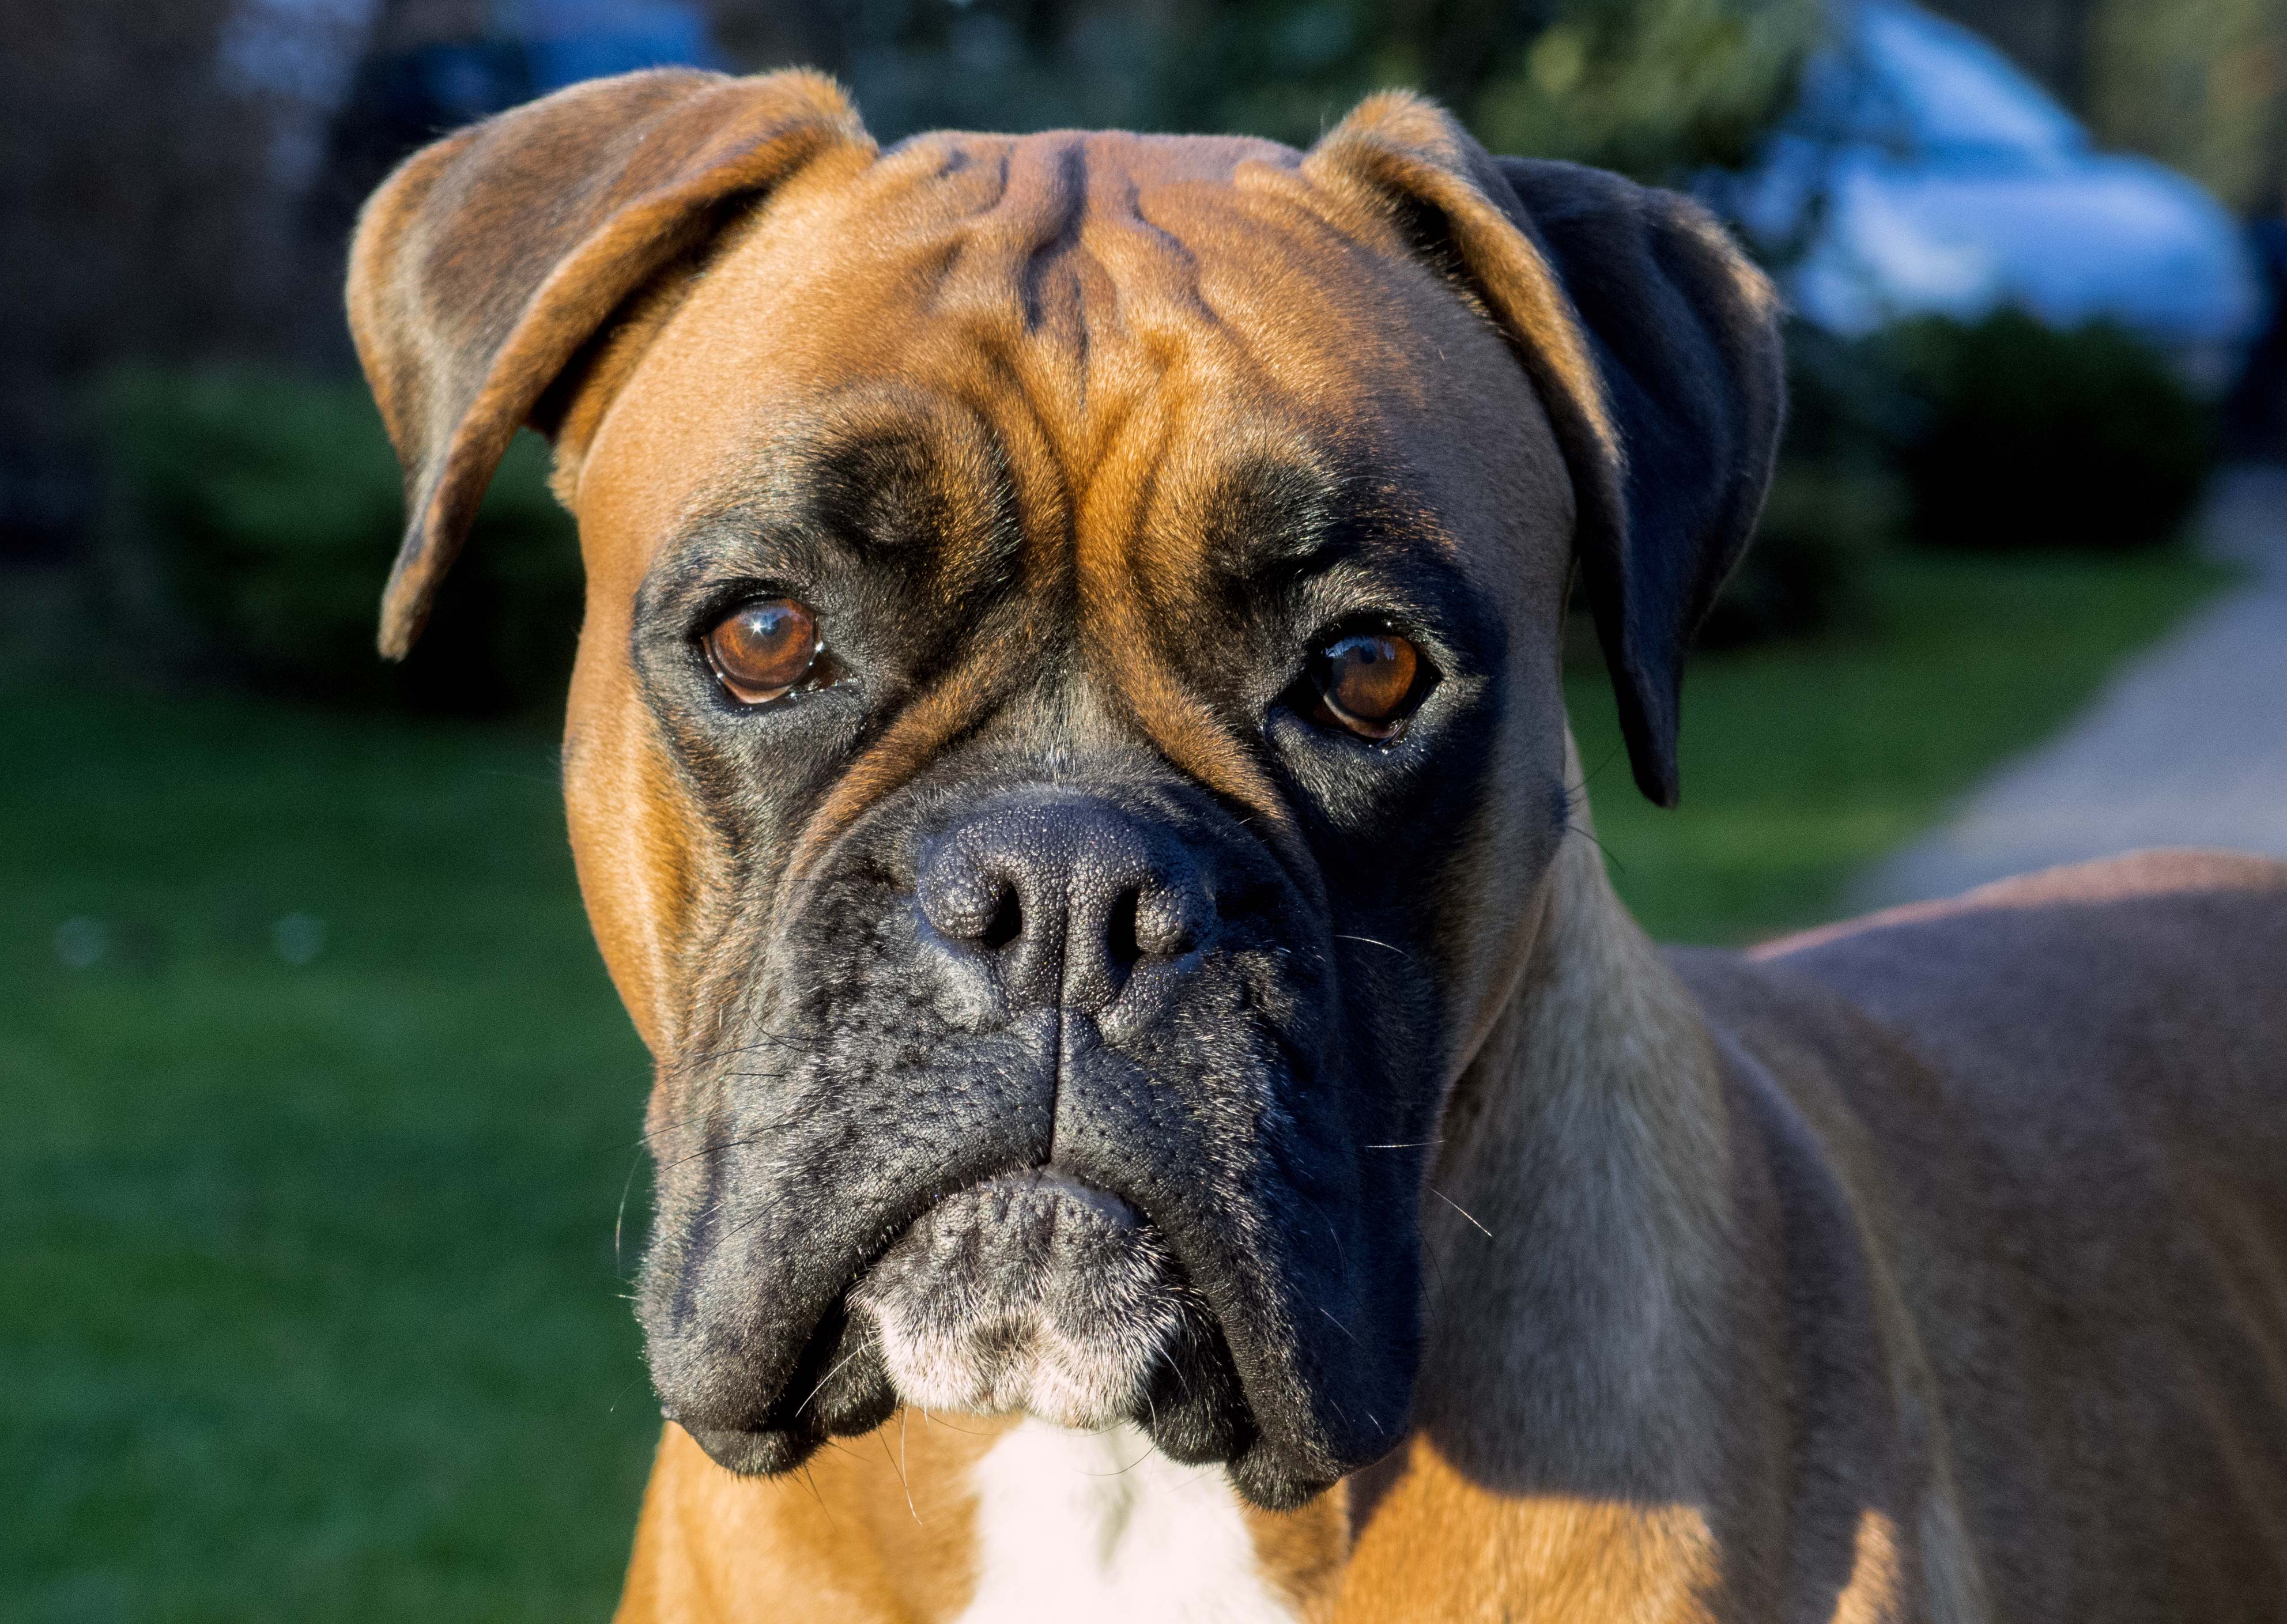 Free Image: Boxer dog face | Libreshot Public Domain Photos